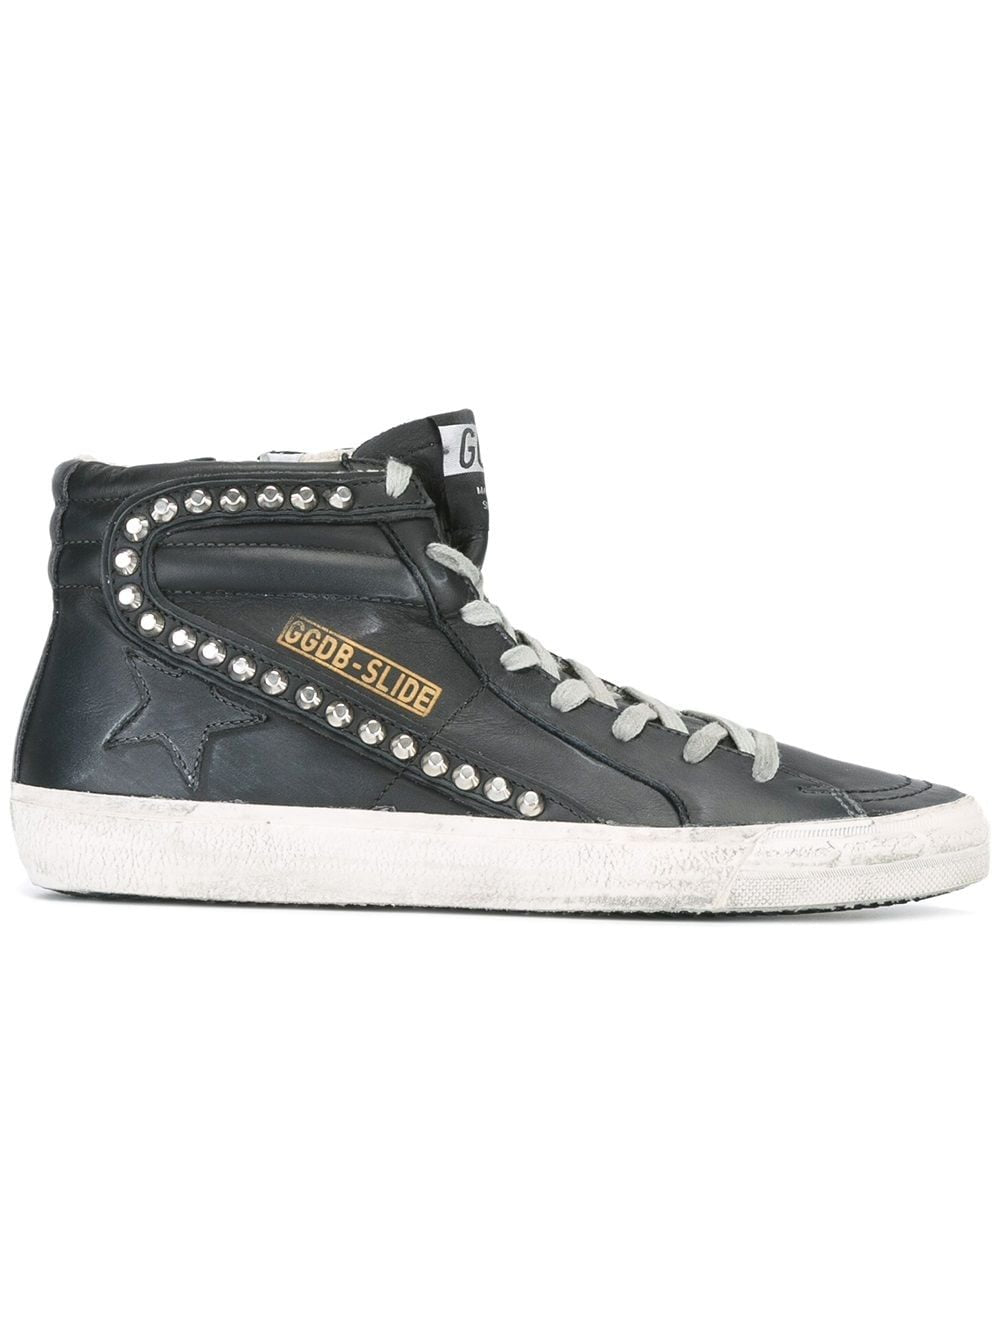 GOLDEN GOOSE Black Slide Sneakers for Women - FW23 Collection